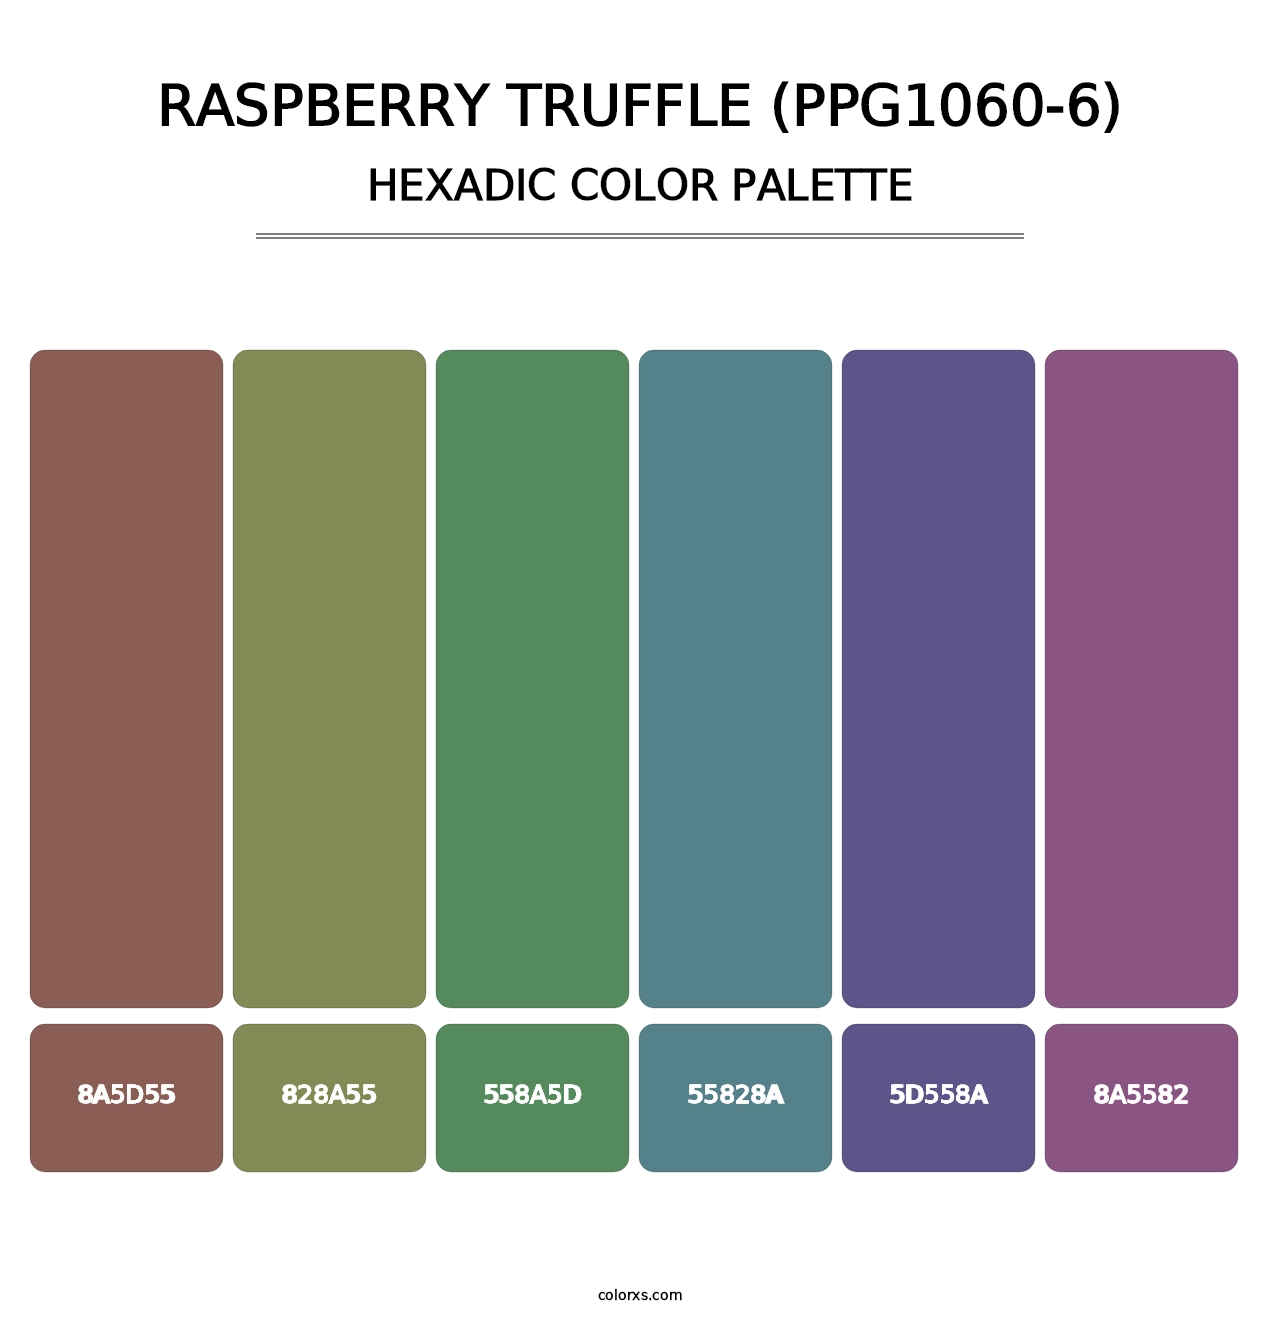 Raspberry Truffle (PPG1060-6) - Hexadic Color Palette